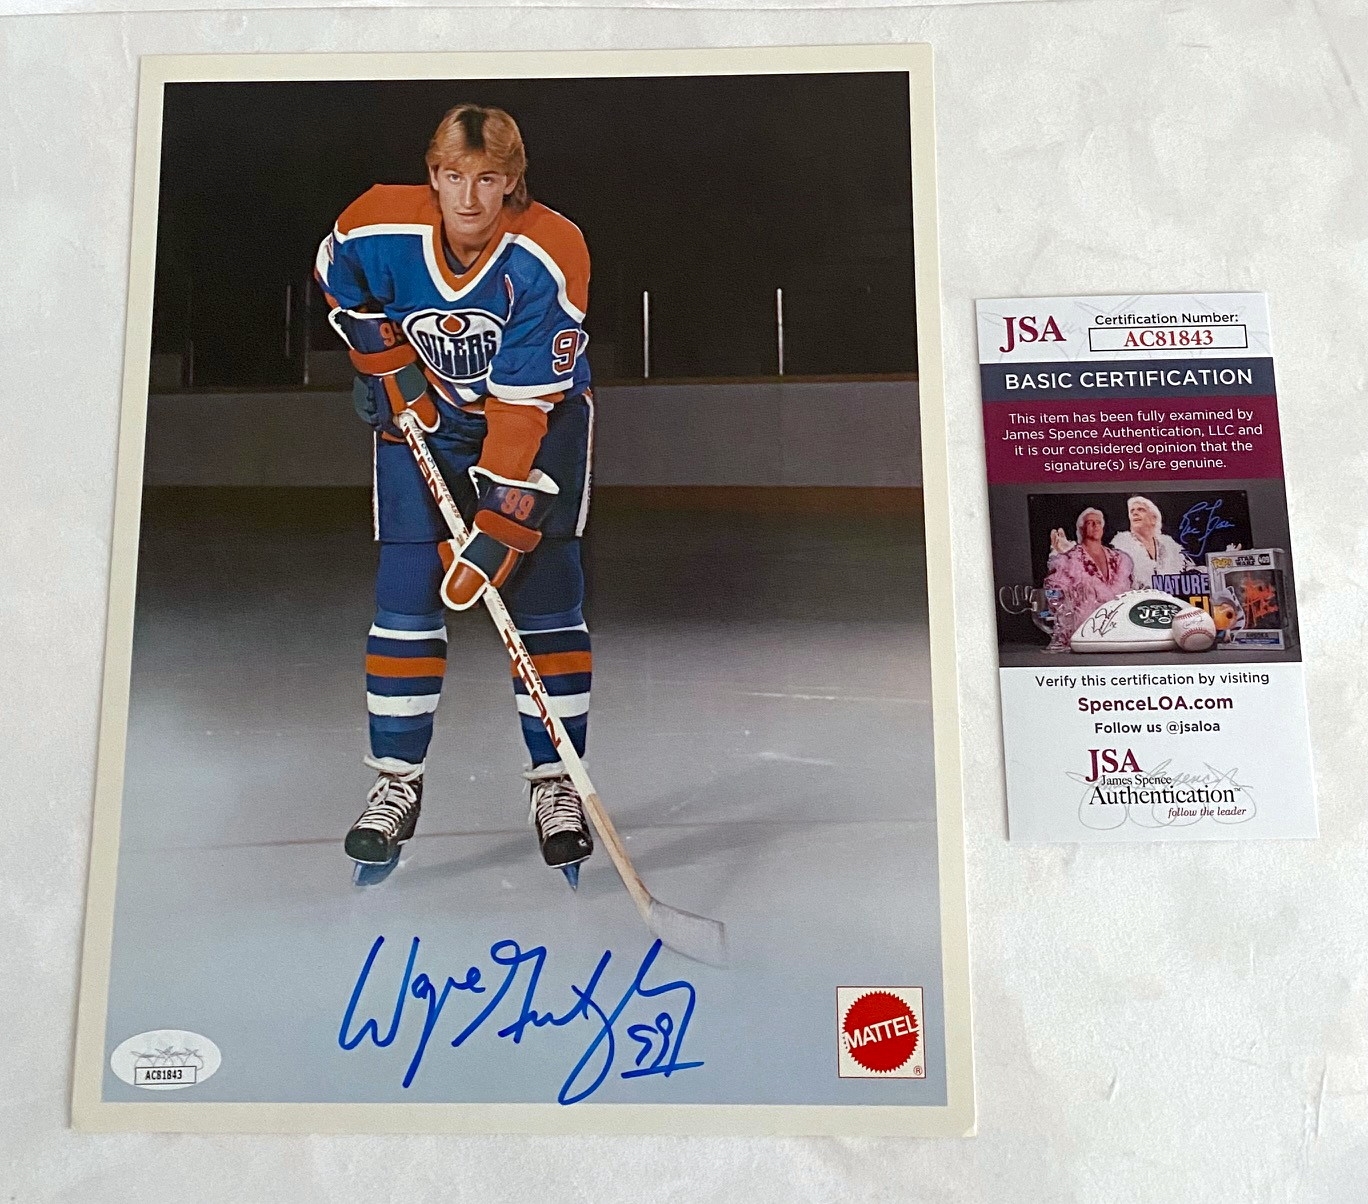 Wayne Gretzky Edmonton Oilers Autographed Mattel 8x10 Photo - Early Career Era Signature